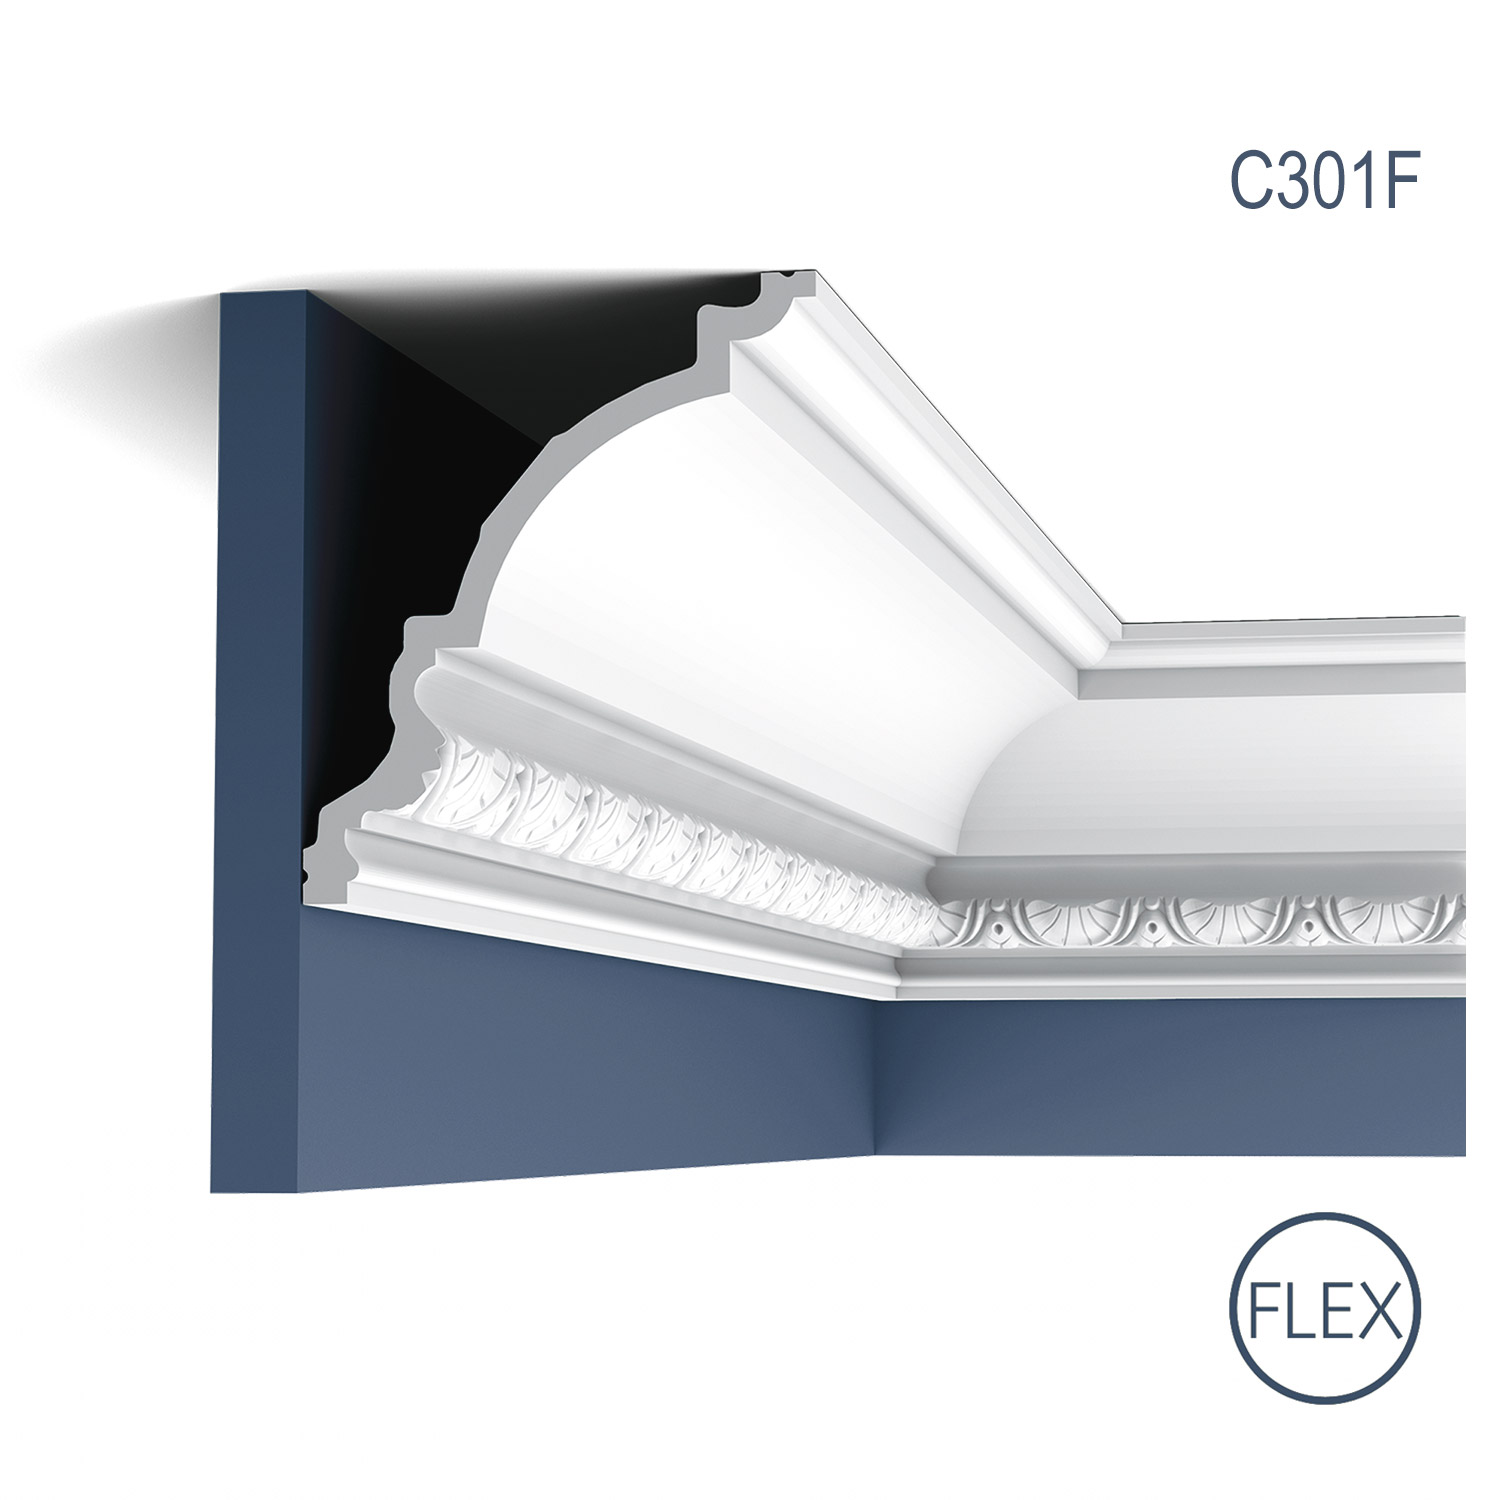 Cornisa Flex Luxxus C301F, Dimensiuni: 200 X 17 X 14.4 cm, Orac Decor